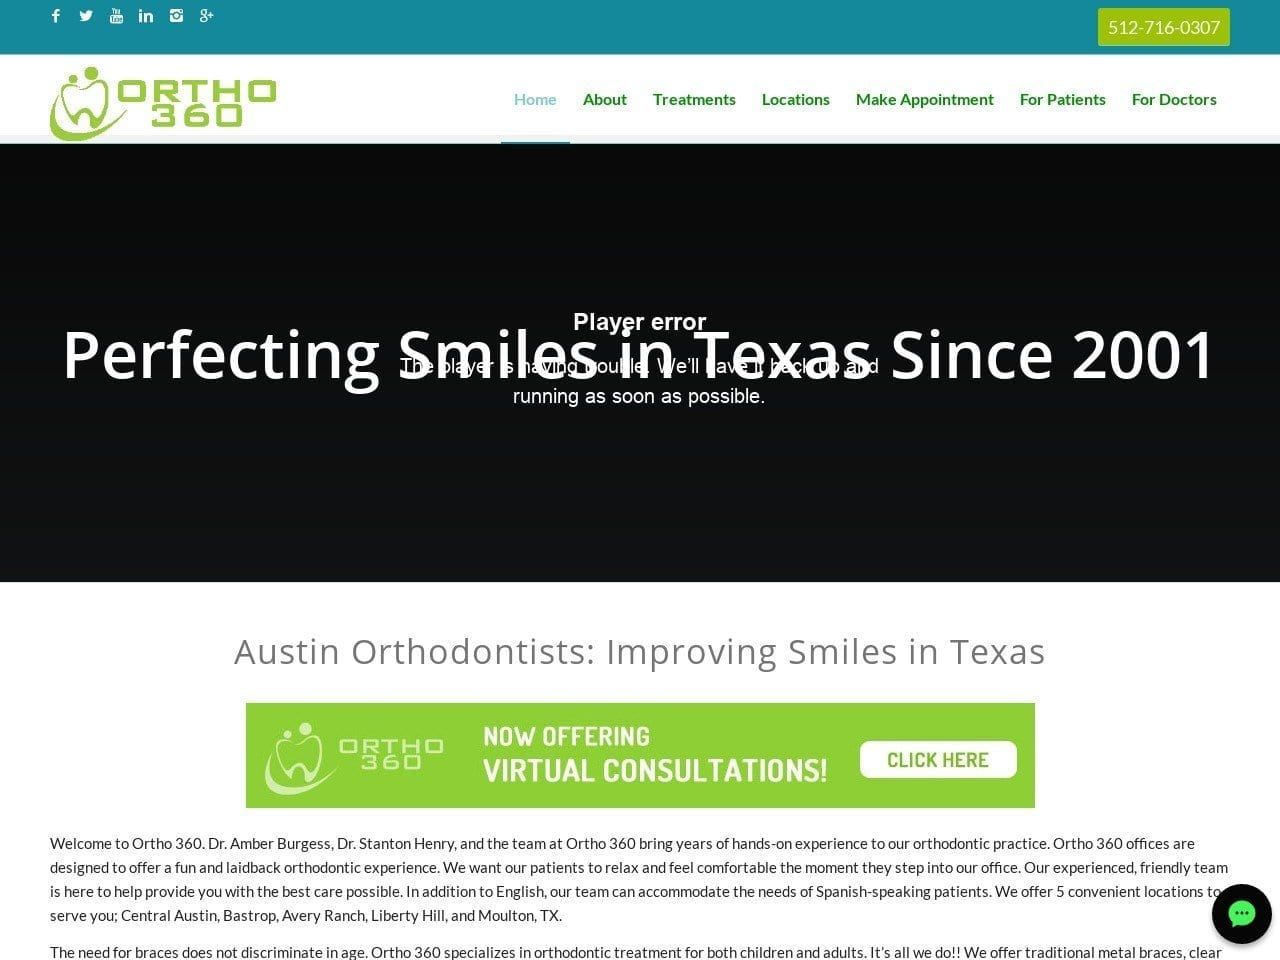 Ortho 360 Orthodontist Website Screenshot from orthdentalcountry.com/o360-2